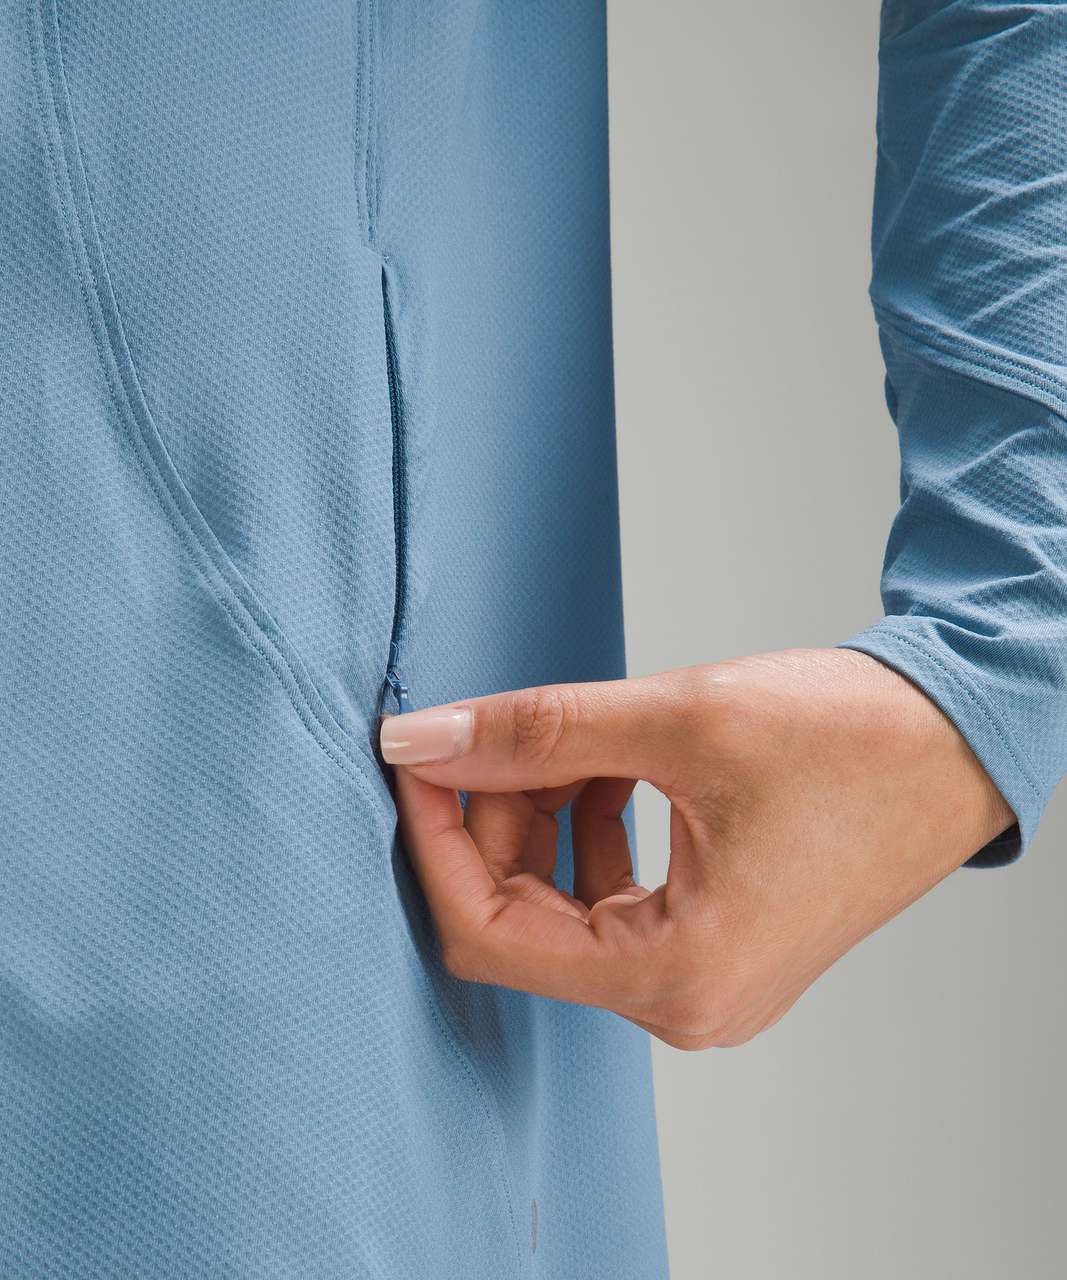 Lululemon Abrasion-Resistant High-Coverage Long-Sleeve Shirt - Utility Blue